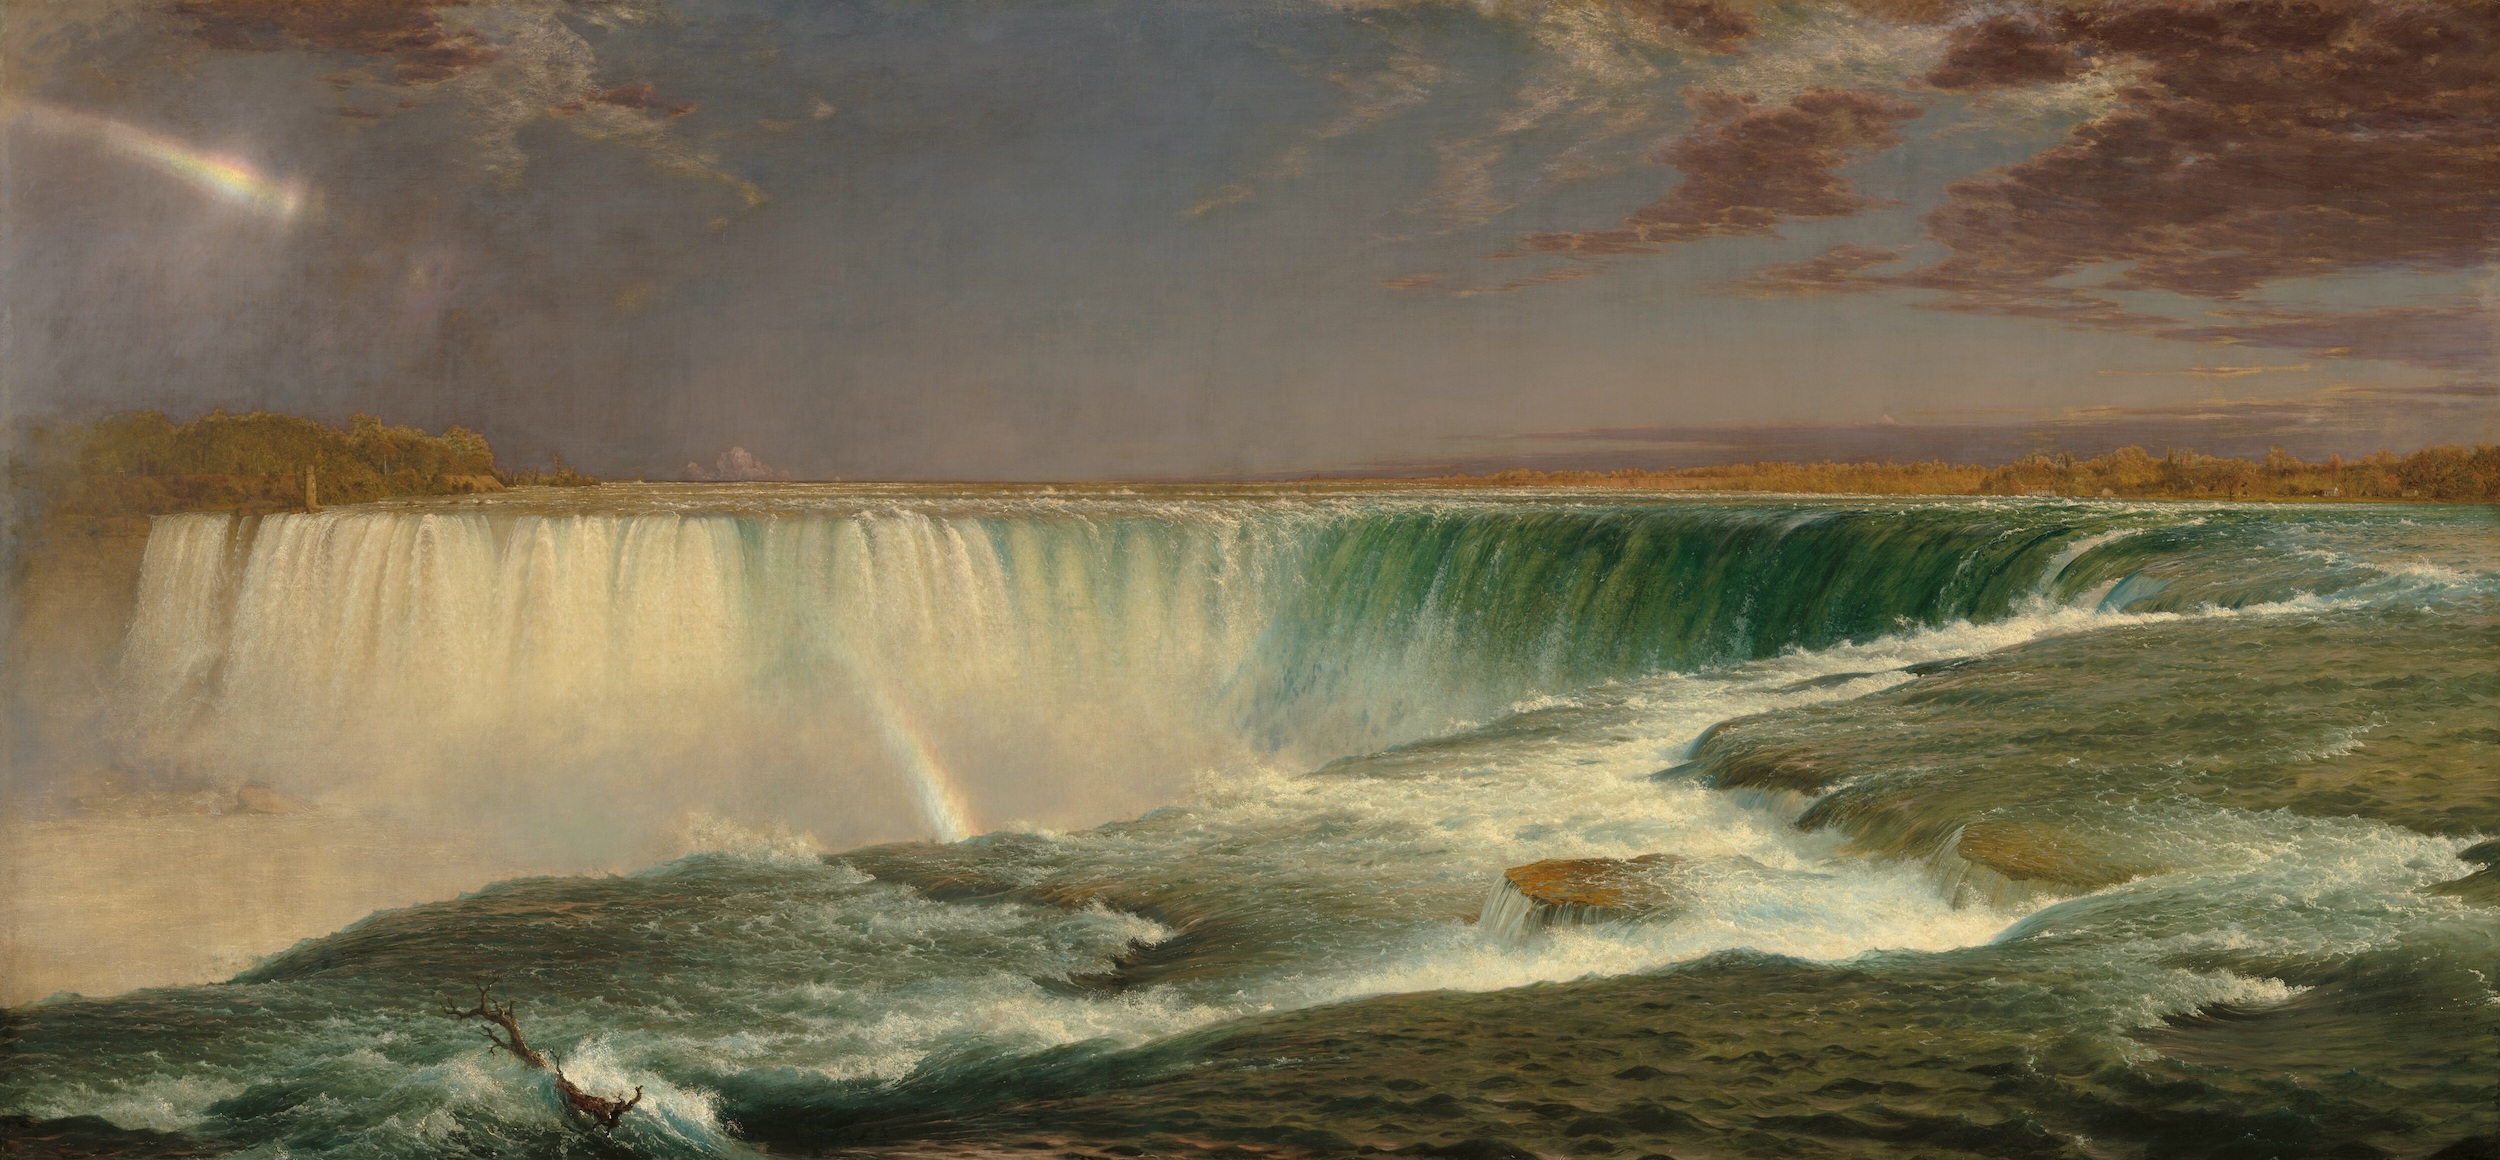 Niagara by Frederic Edwin Church - 1857 National Gallery of Art